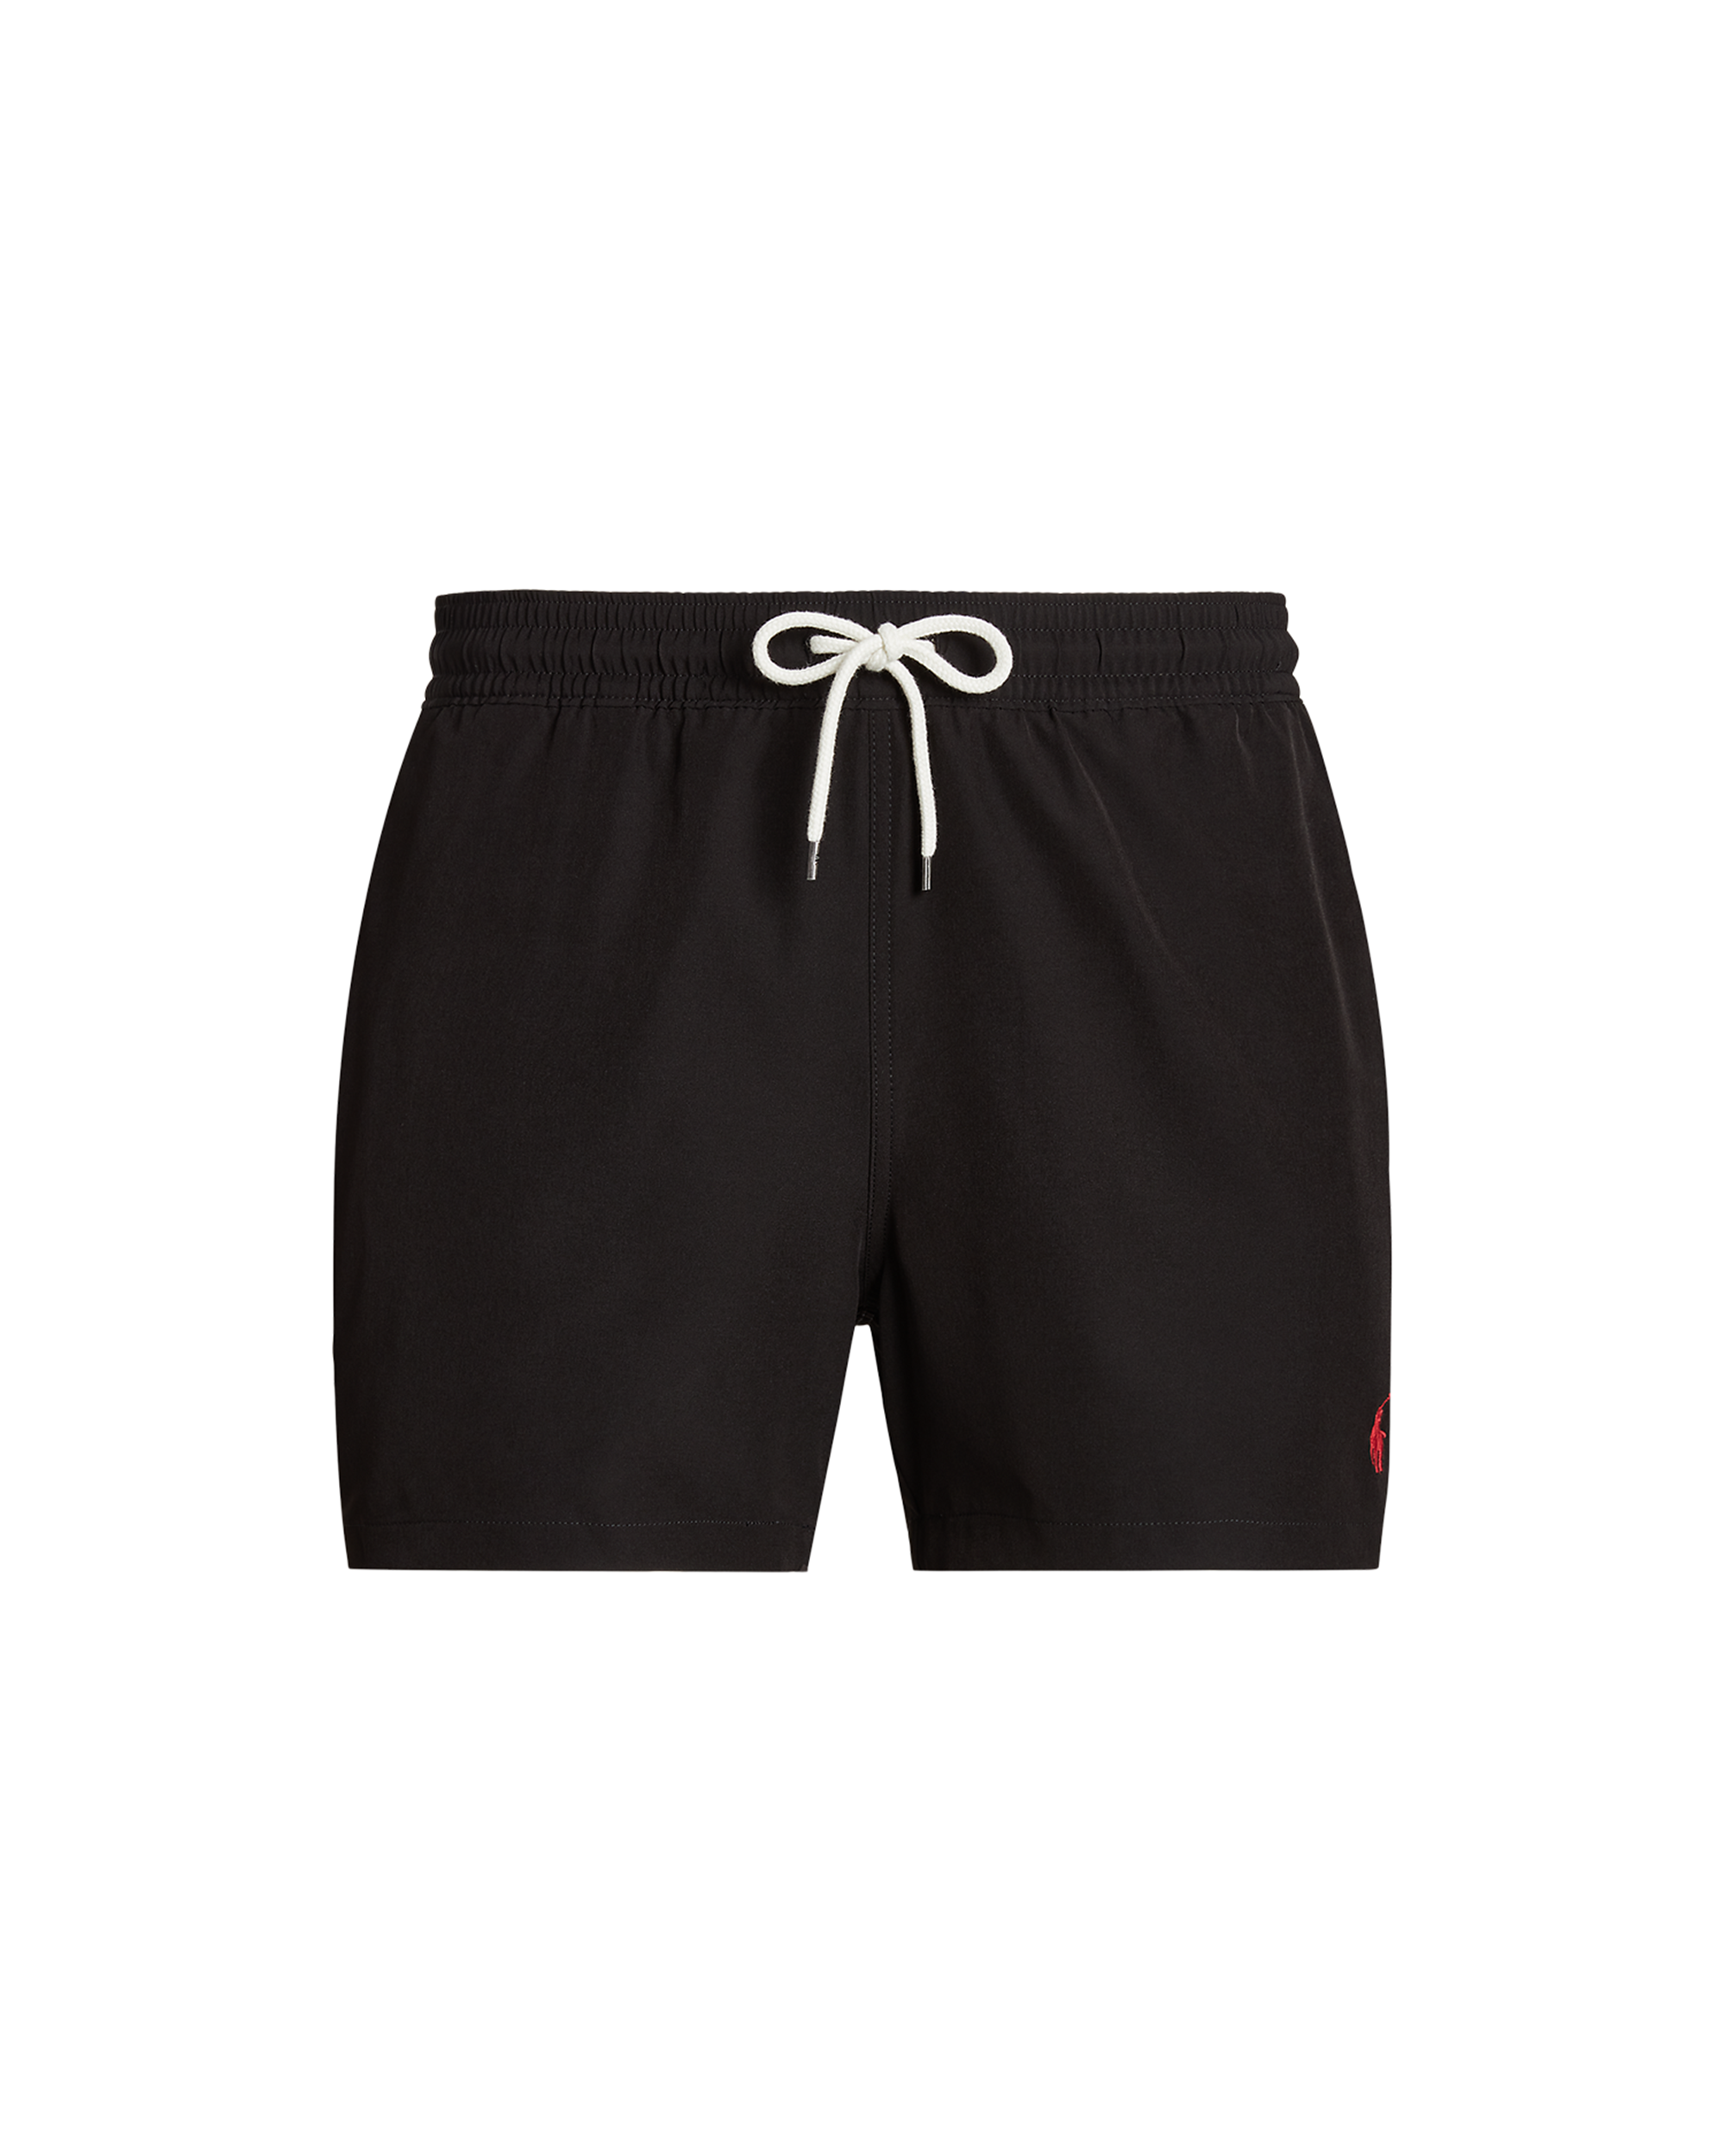 Traveler Swim Shorts - Black